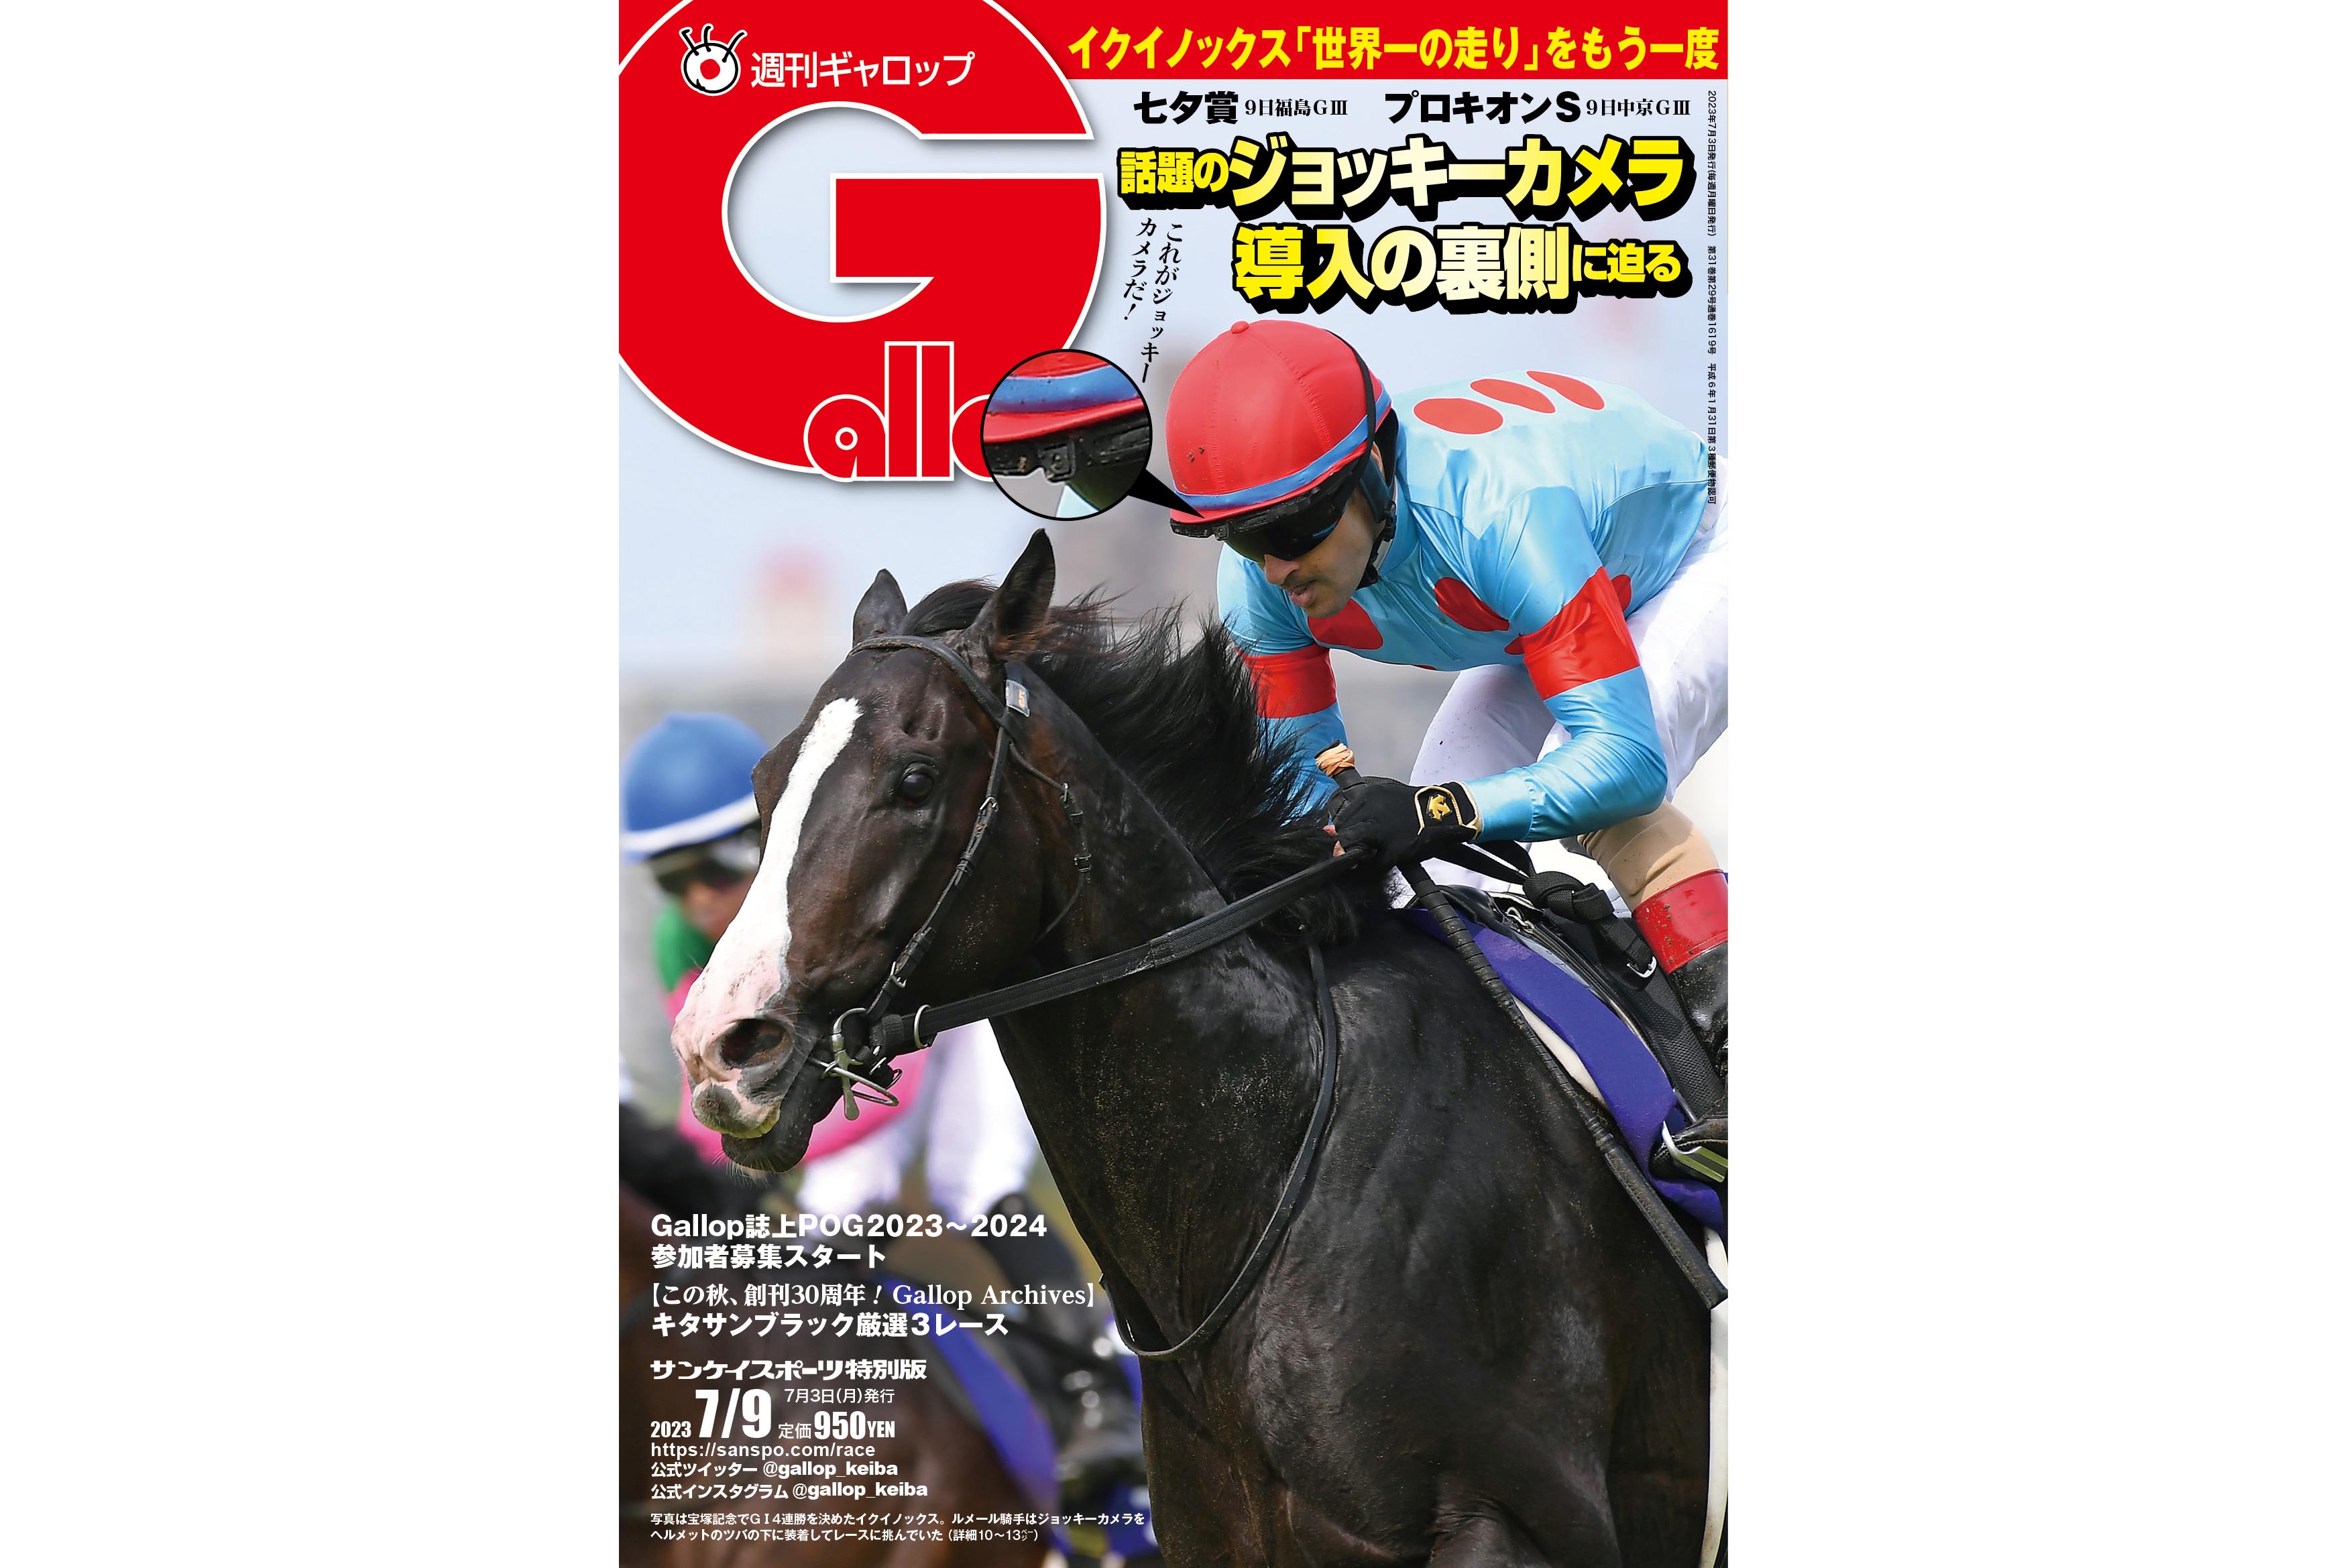 最新号 週刊ギャロップ 2023 9 24日号 Gallop 競馬 雑誌 JRA - 趣味